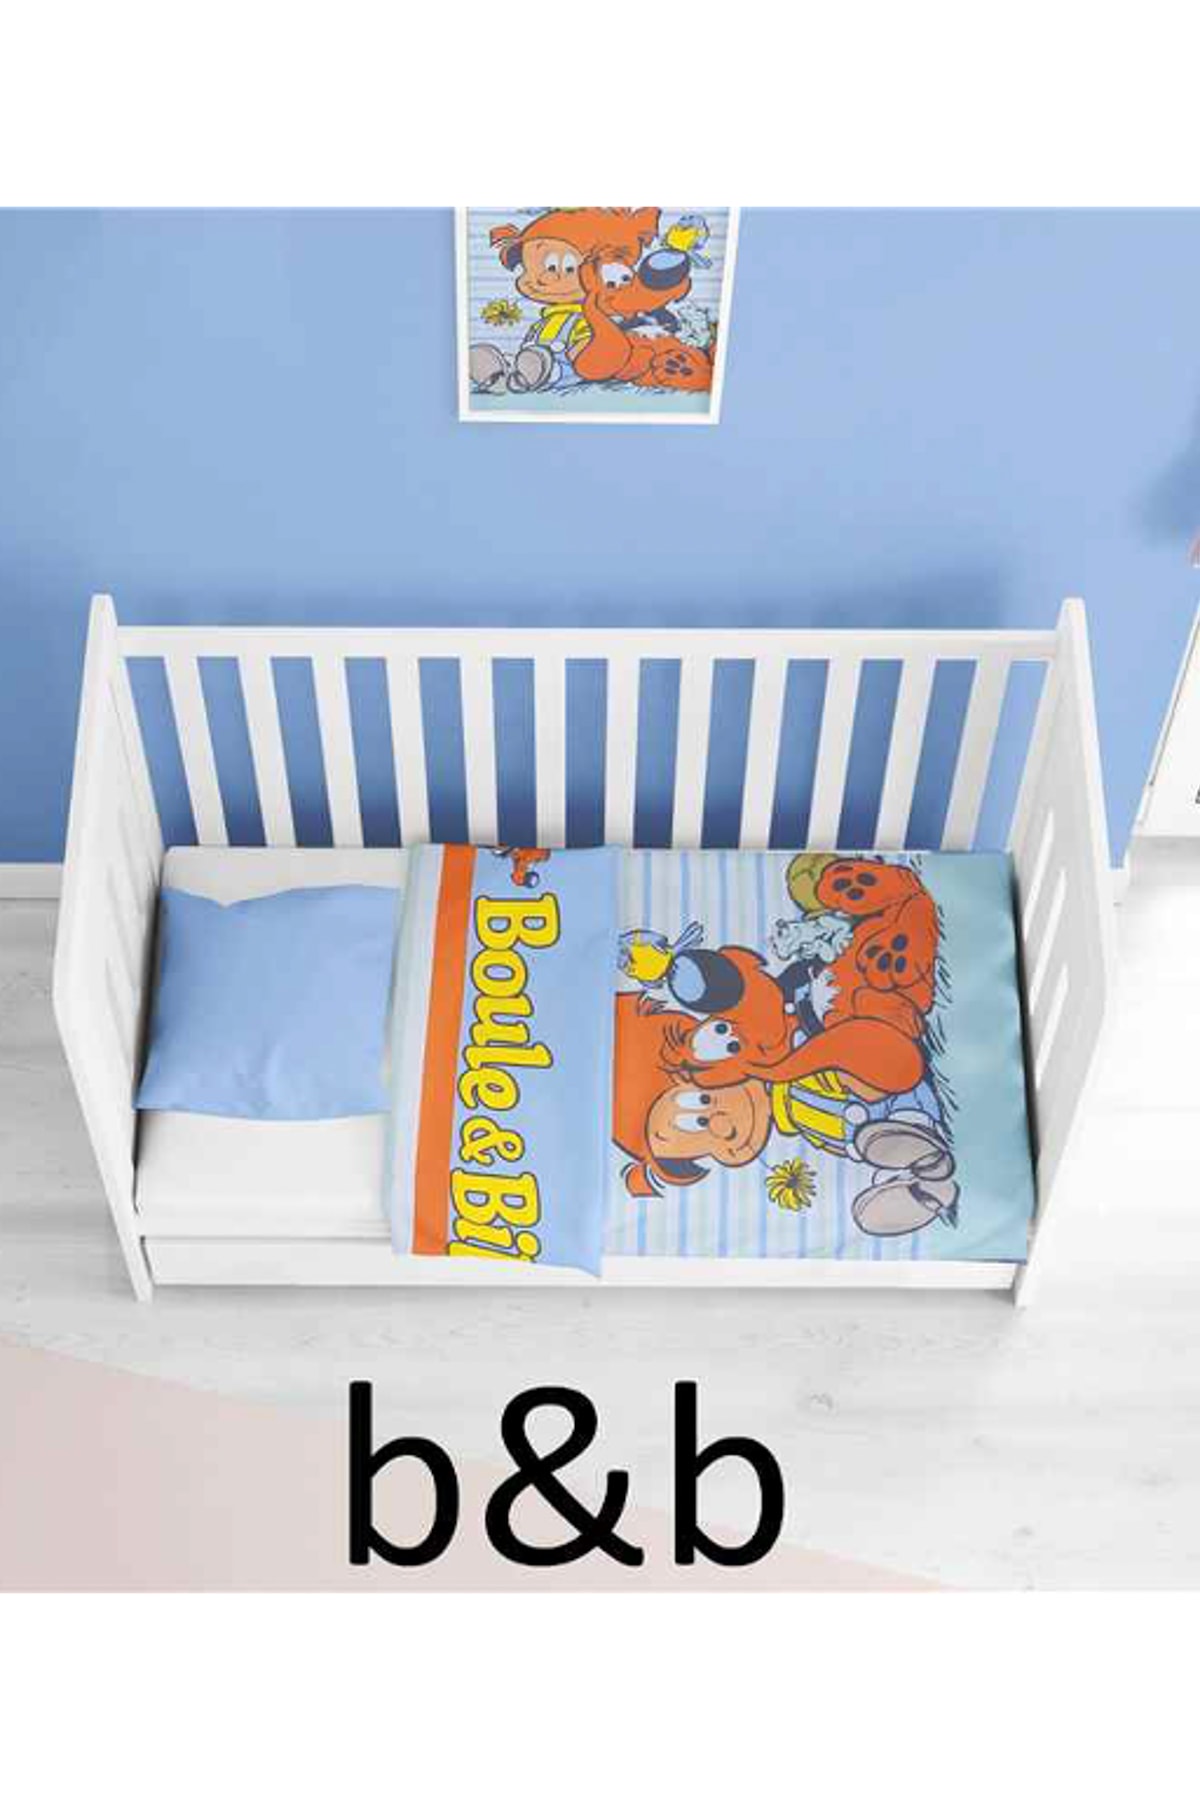 100 cotton Boubil Baby Bedding sets baby children&s bed cover duvet cover kit carsap pillow case quilt